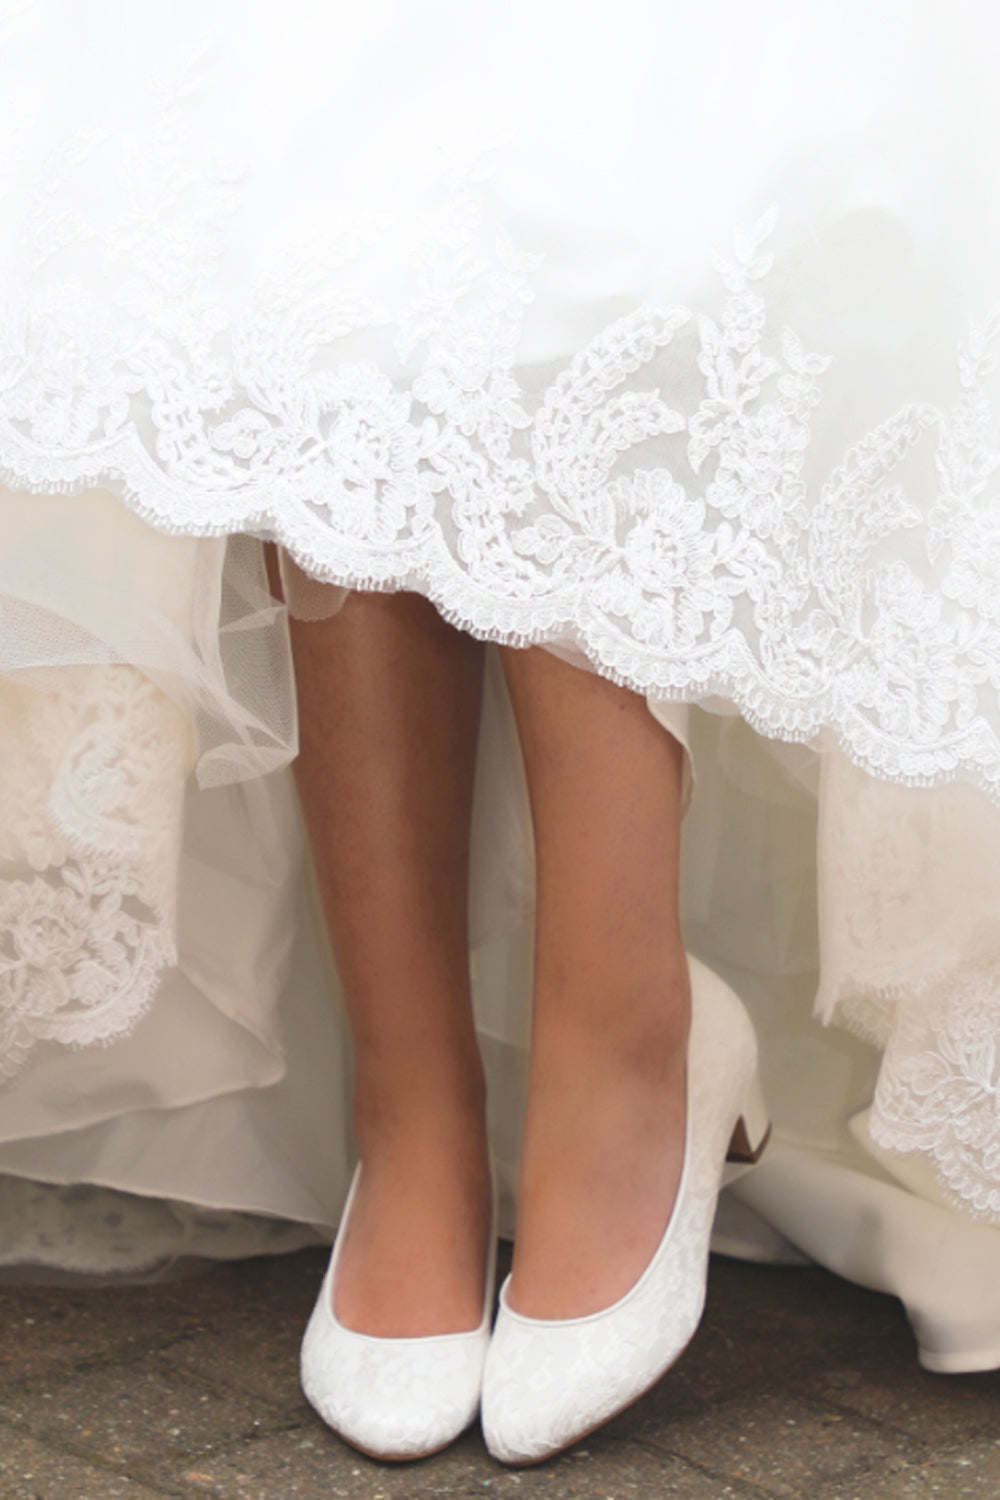 Melanie lace low heel wedding court shoes